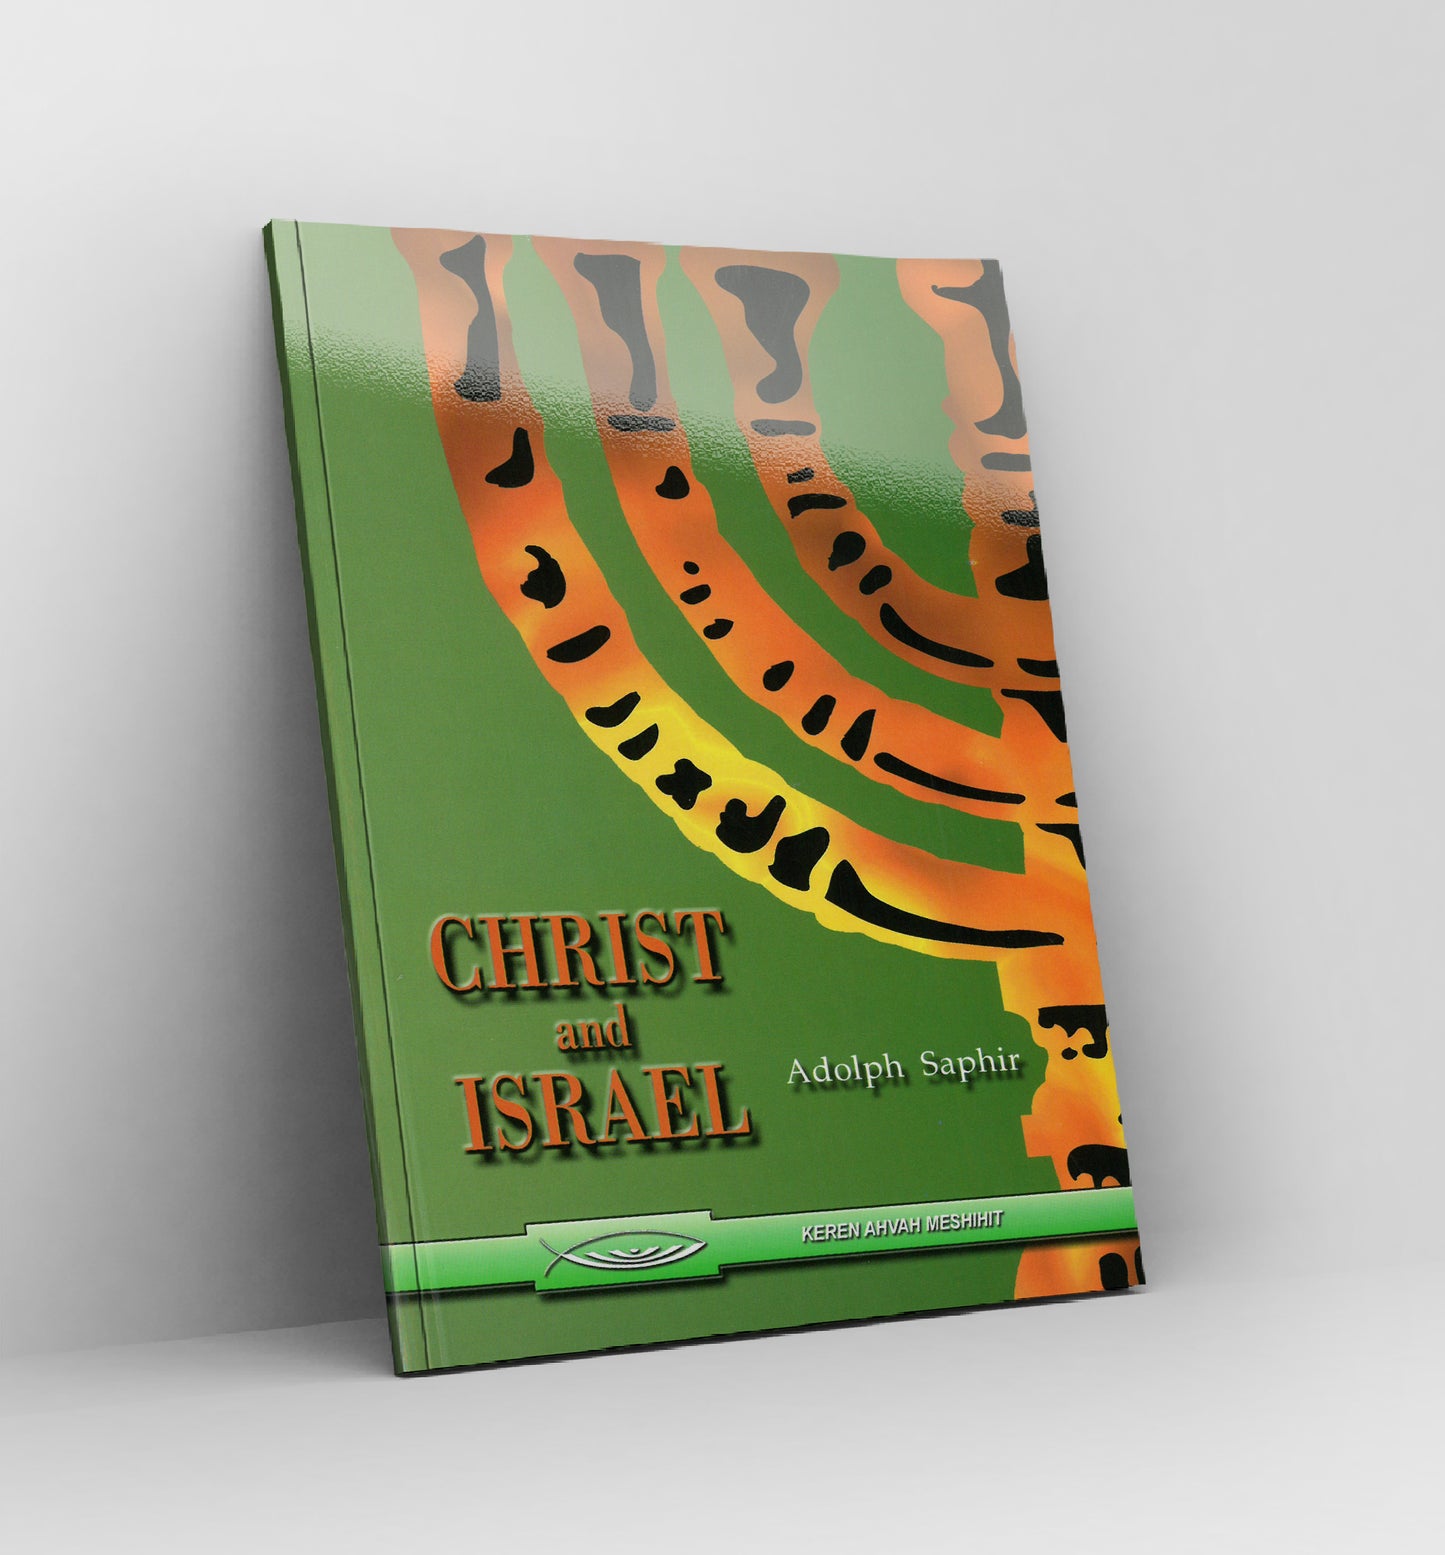 Christ and Israel by Adolf Saphir - Book